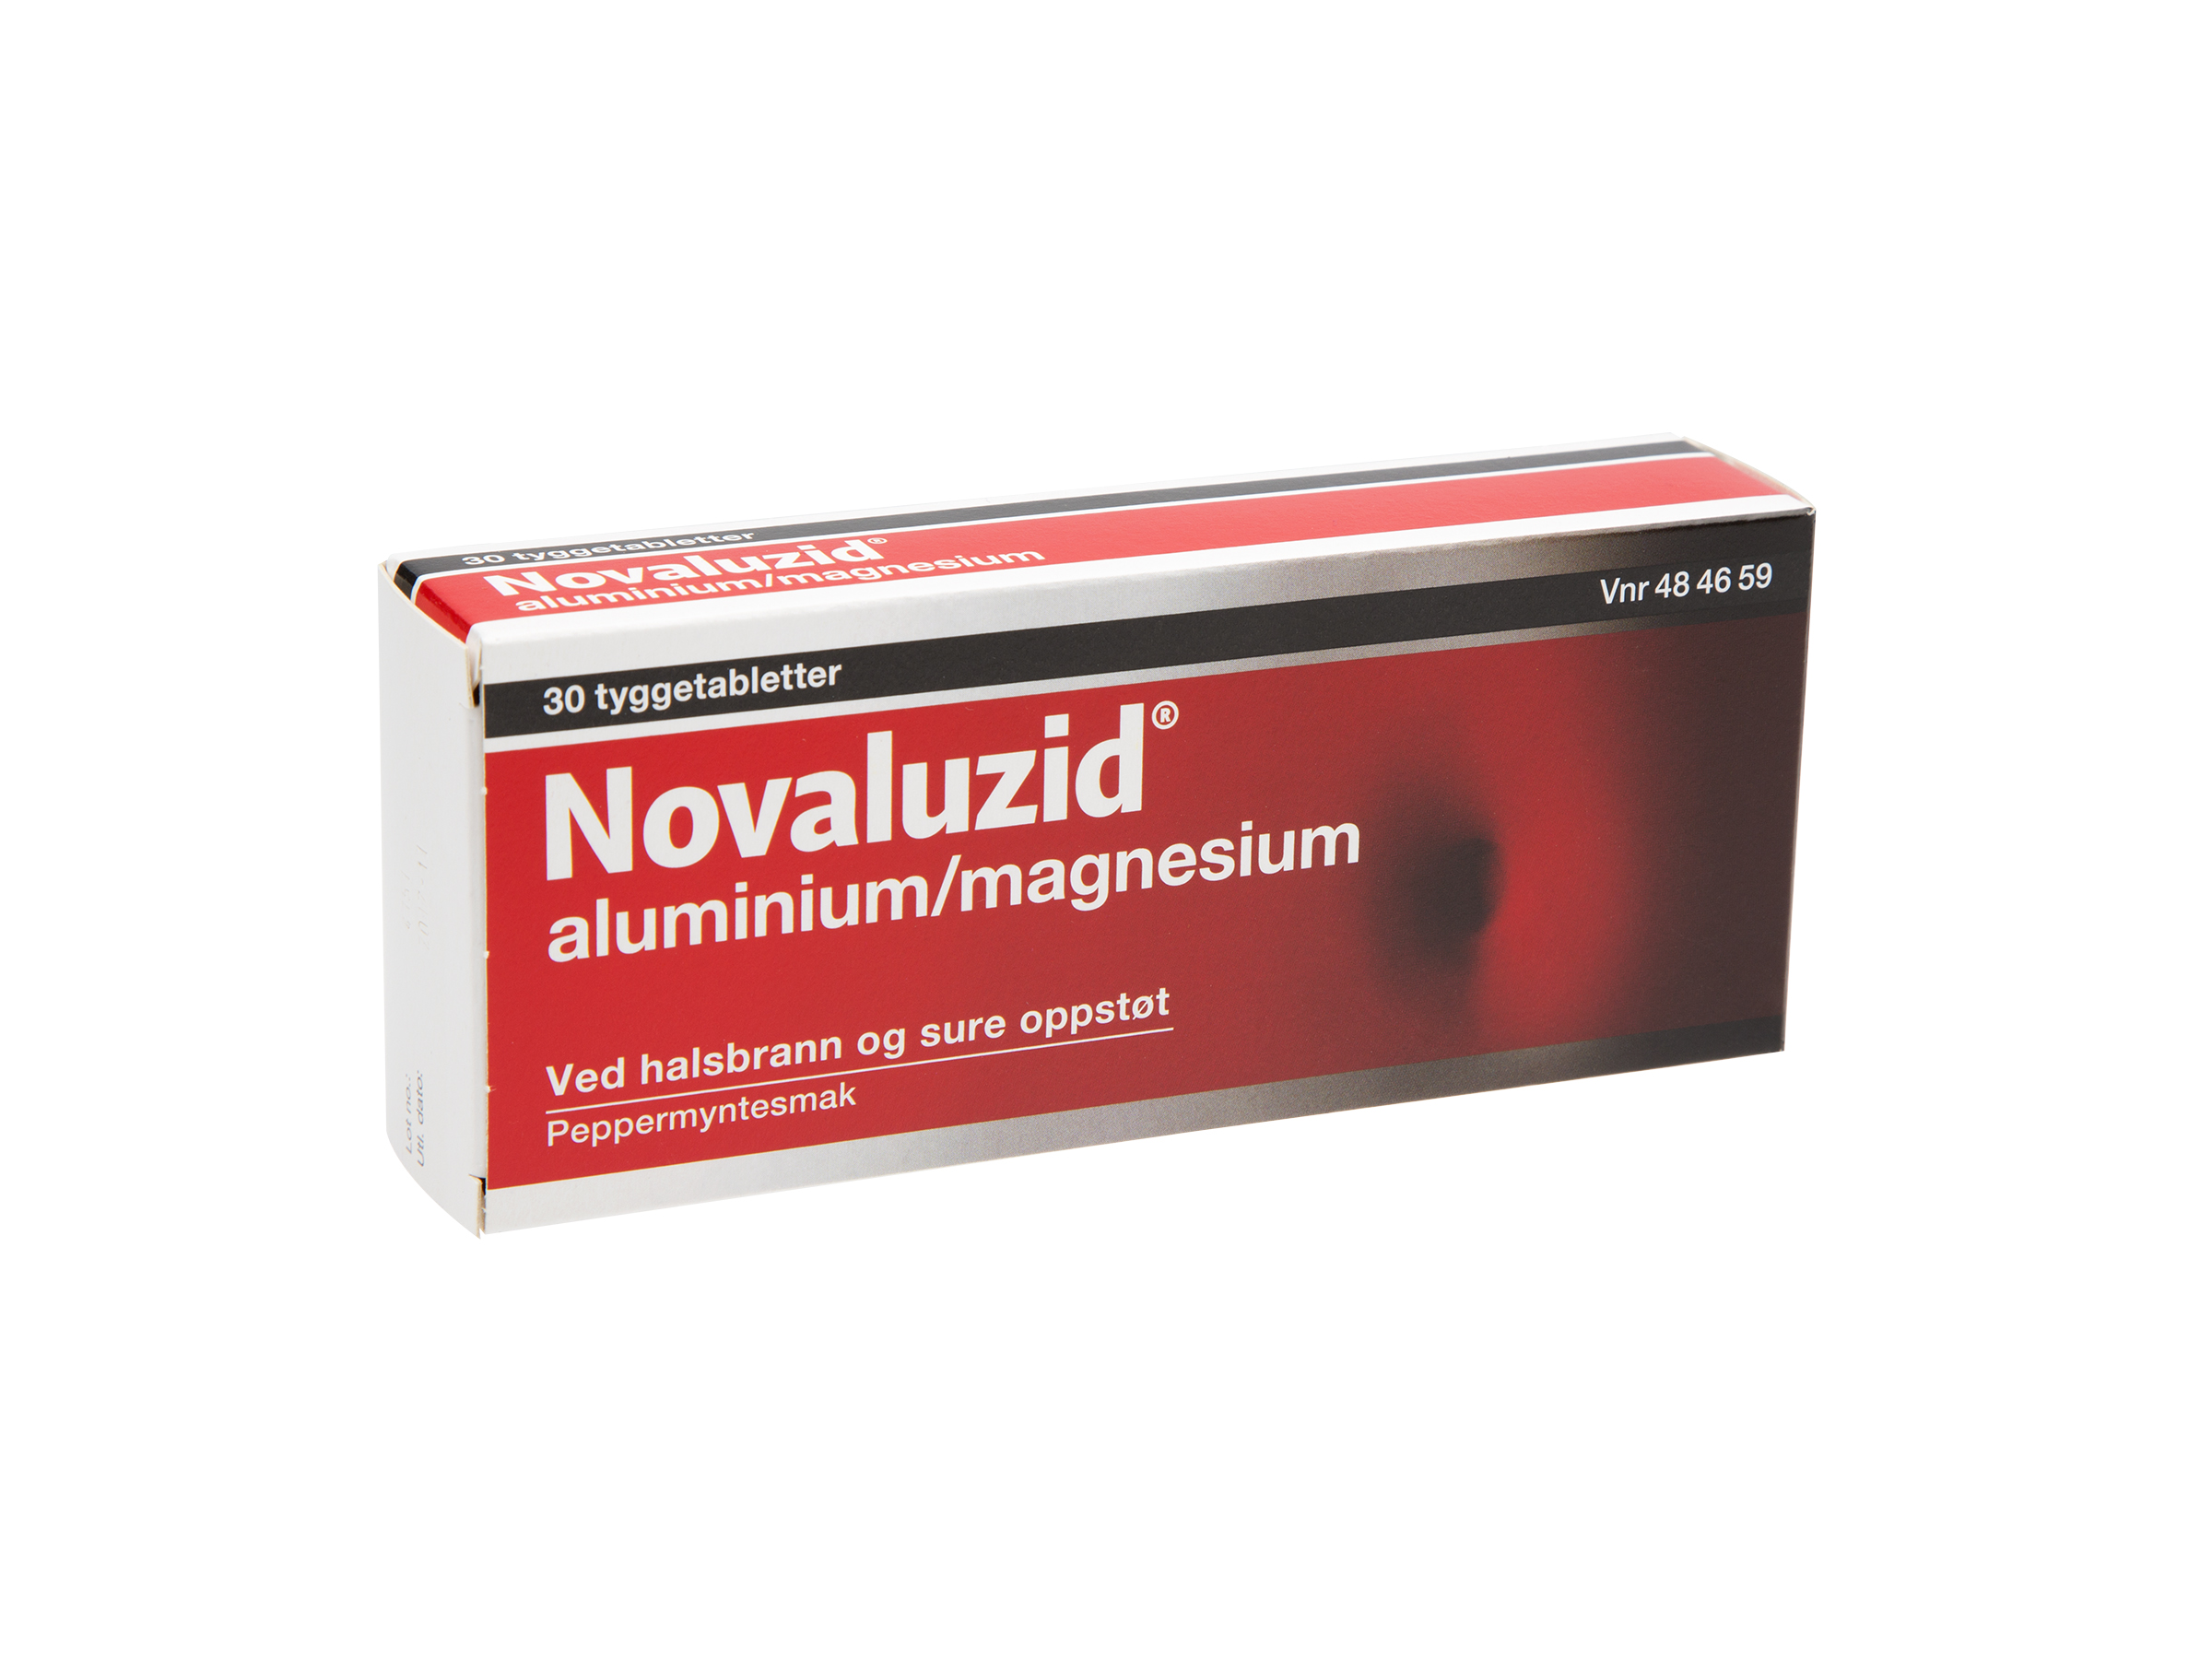 Novaluzid Mint tyggetabletter, 30 stk. på brett